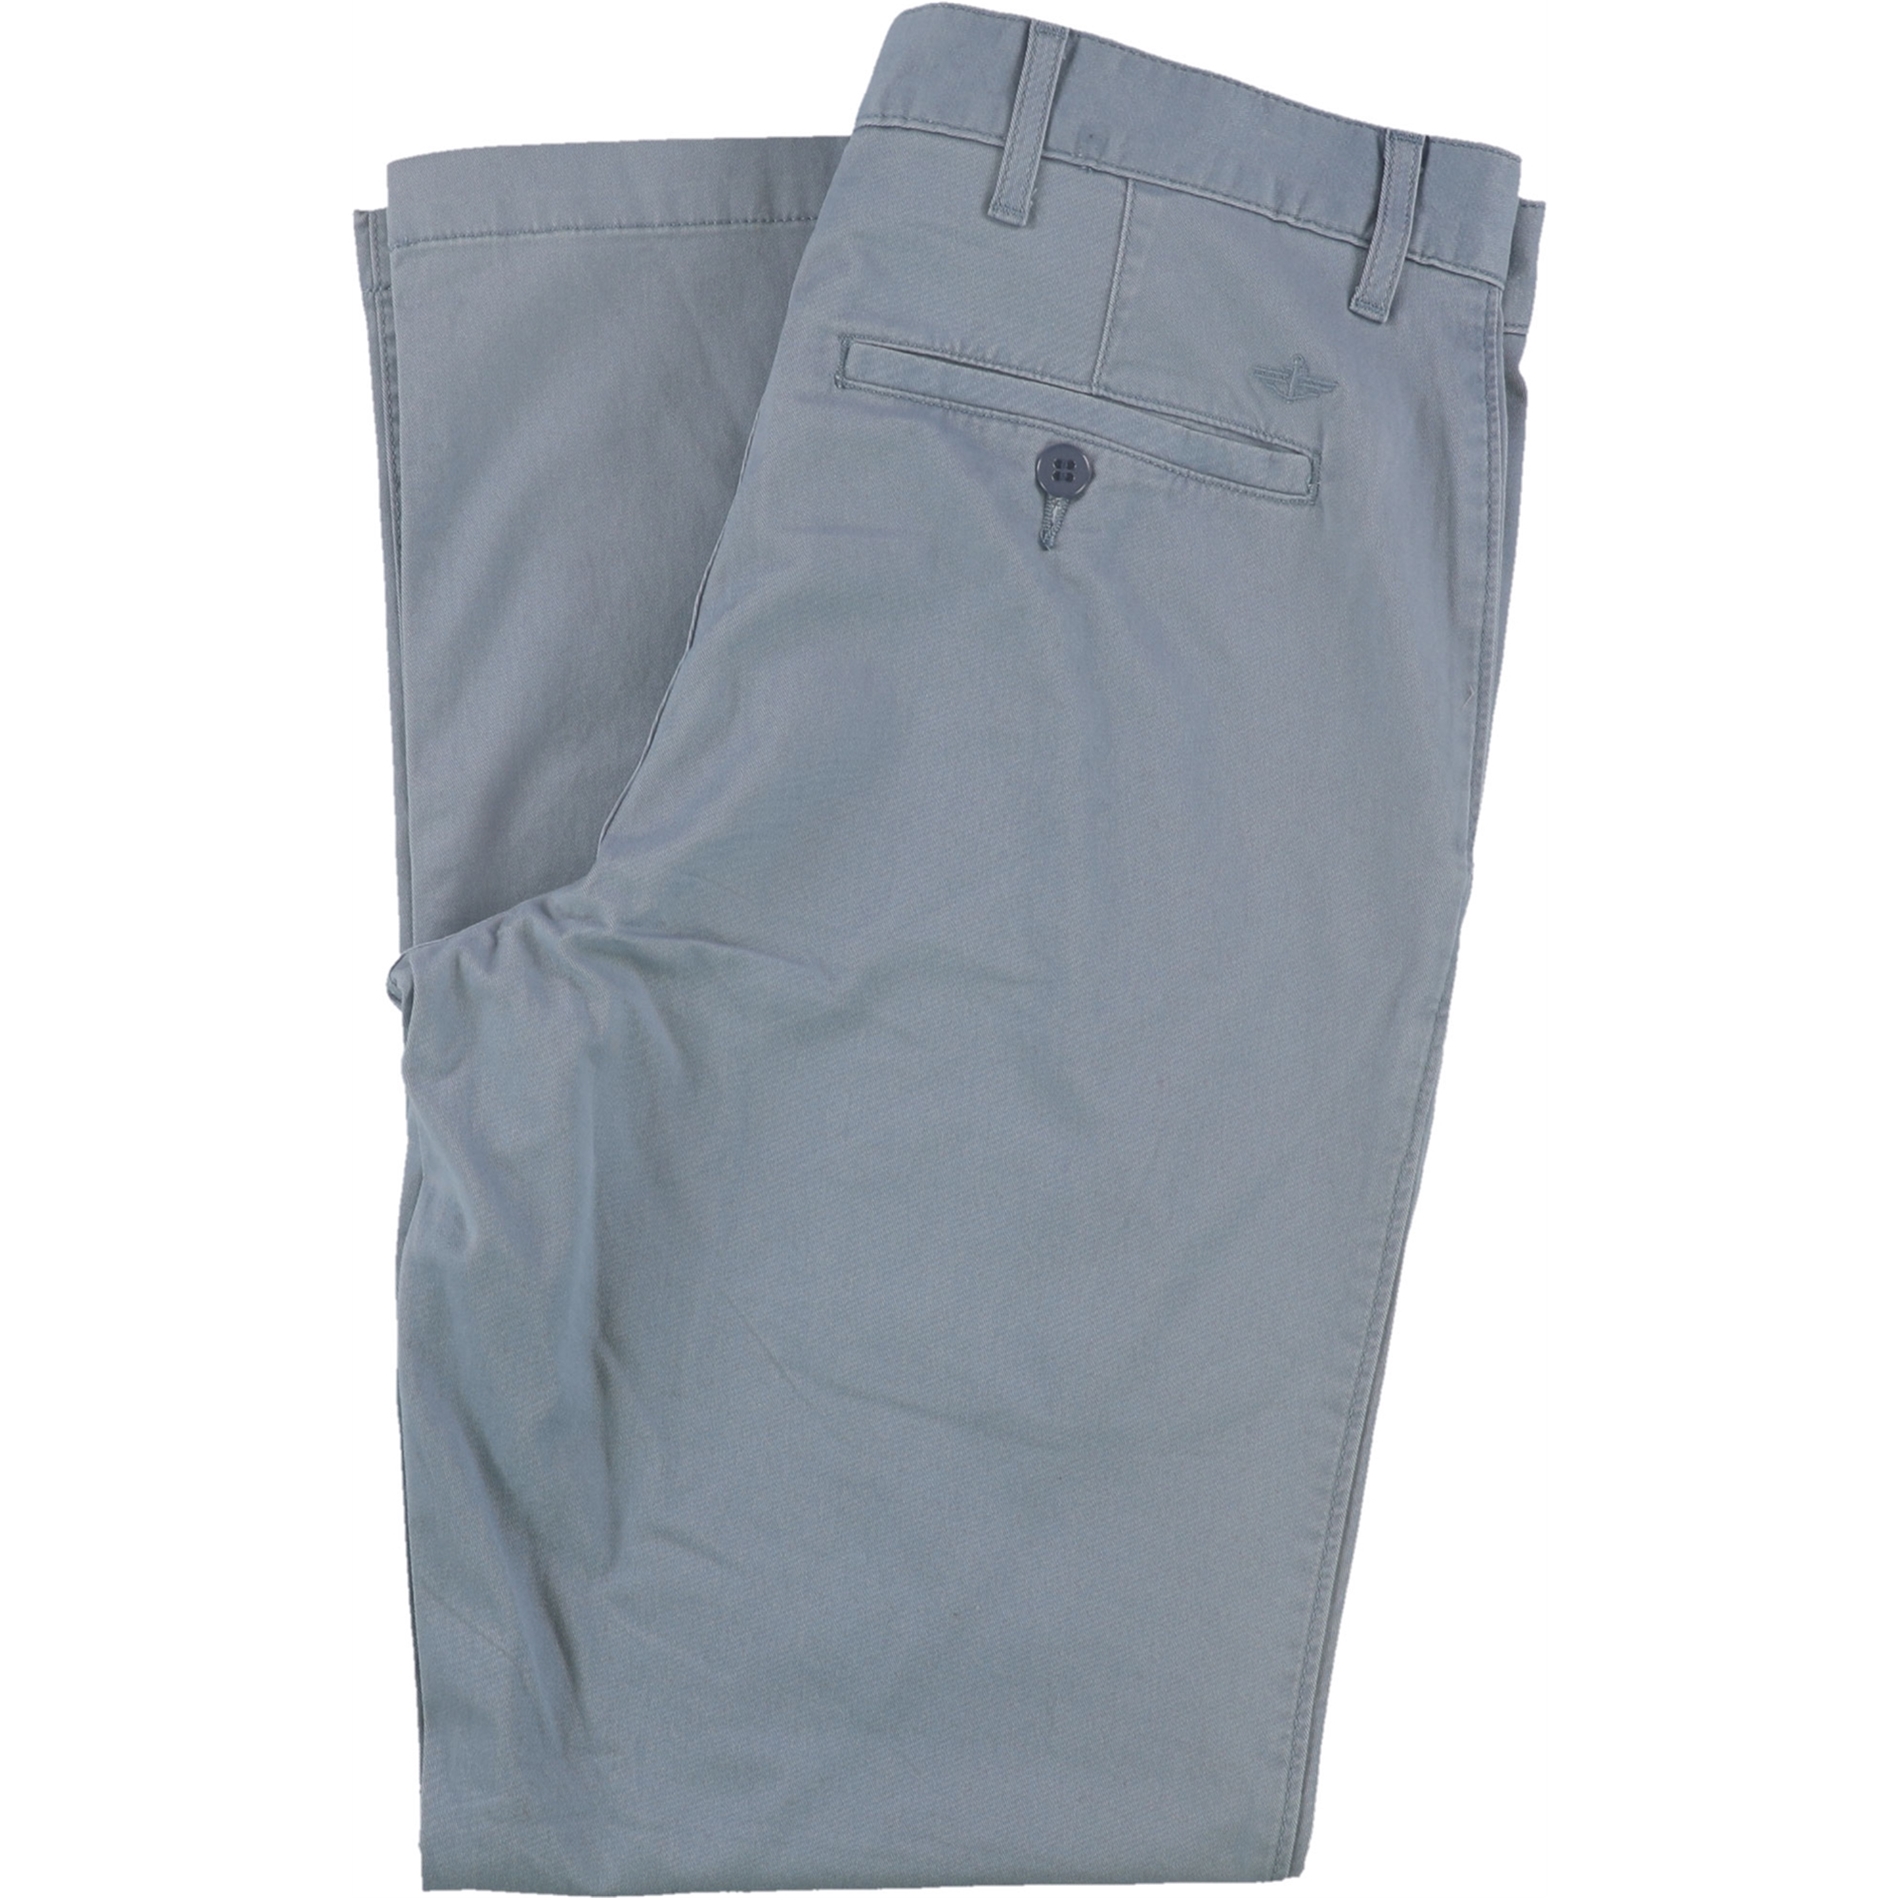 Dockers Mens Classic Khaki Casual Chino Pants